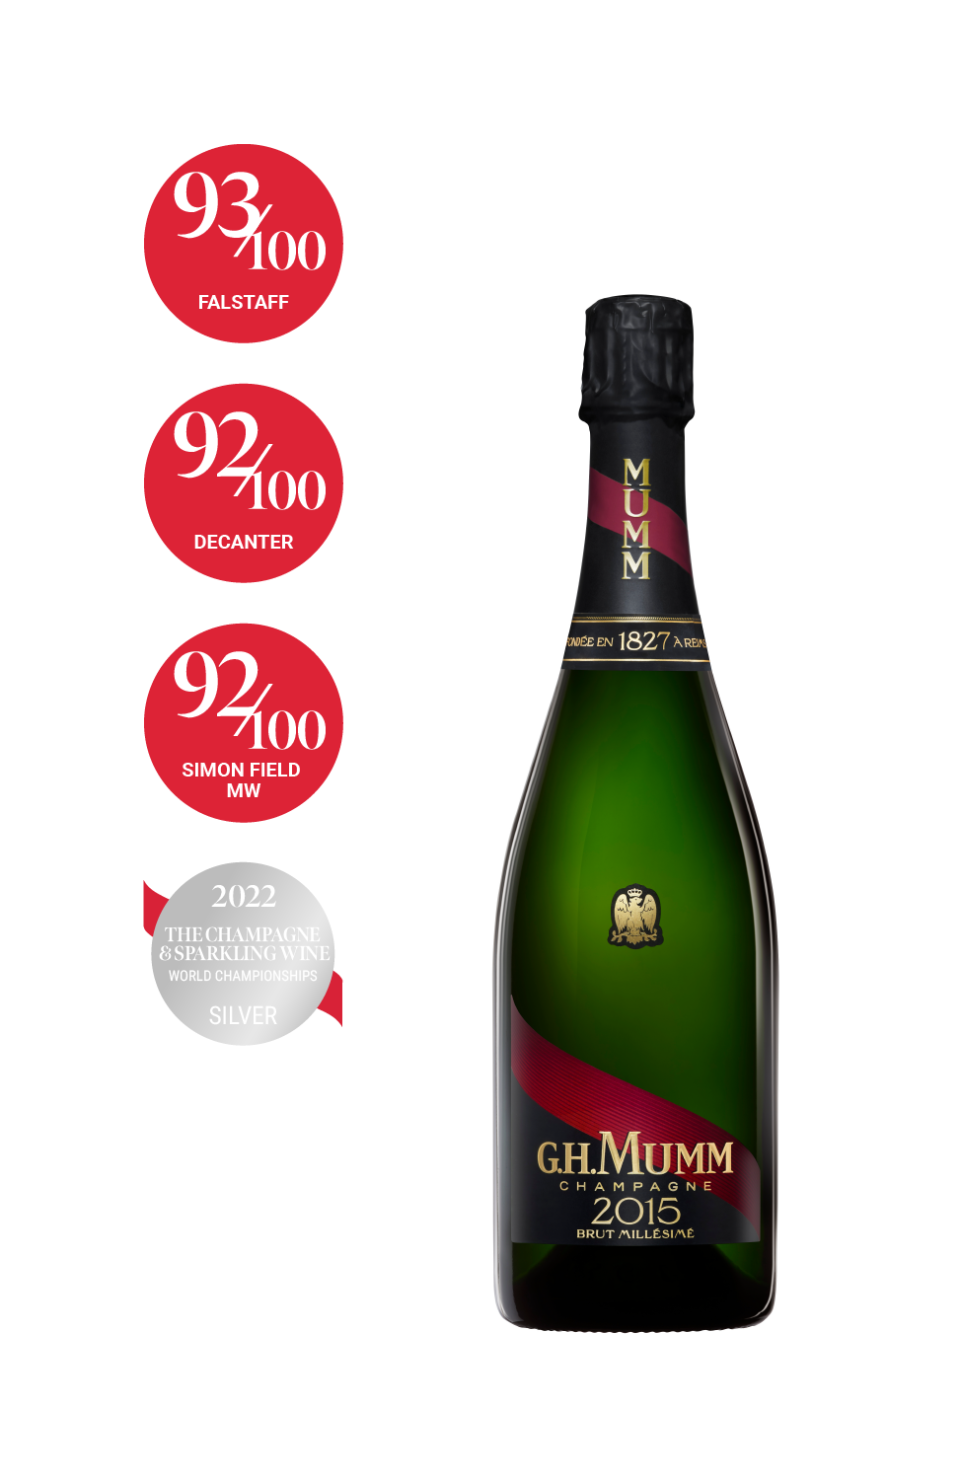 Champagne Brut Millésimé 2015 - G.H. Mumm (astuccio)